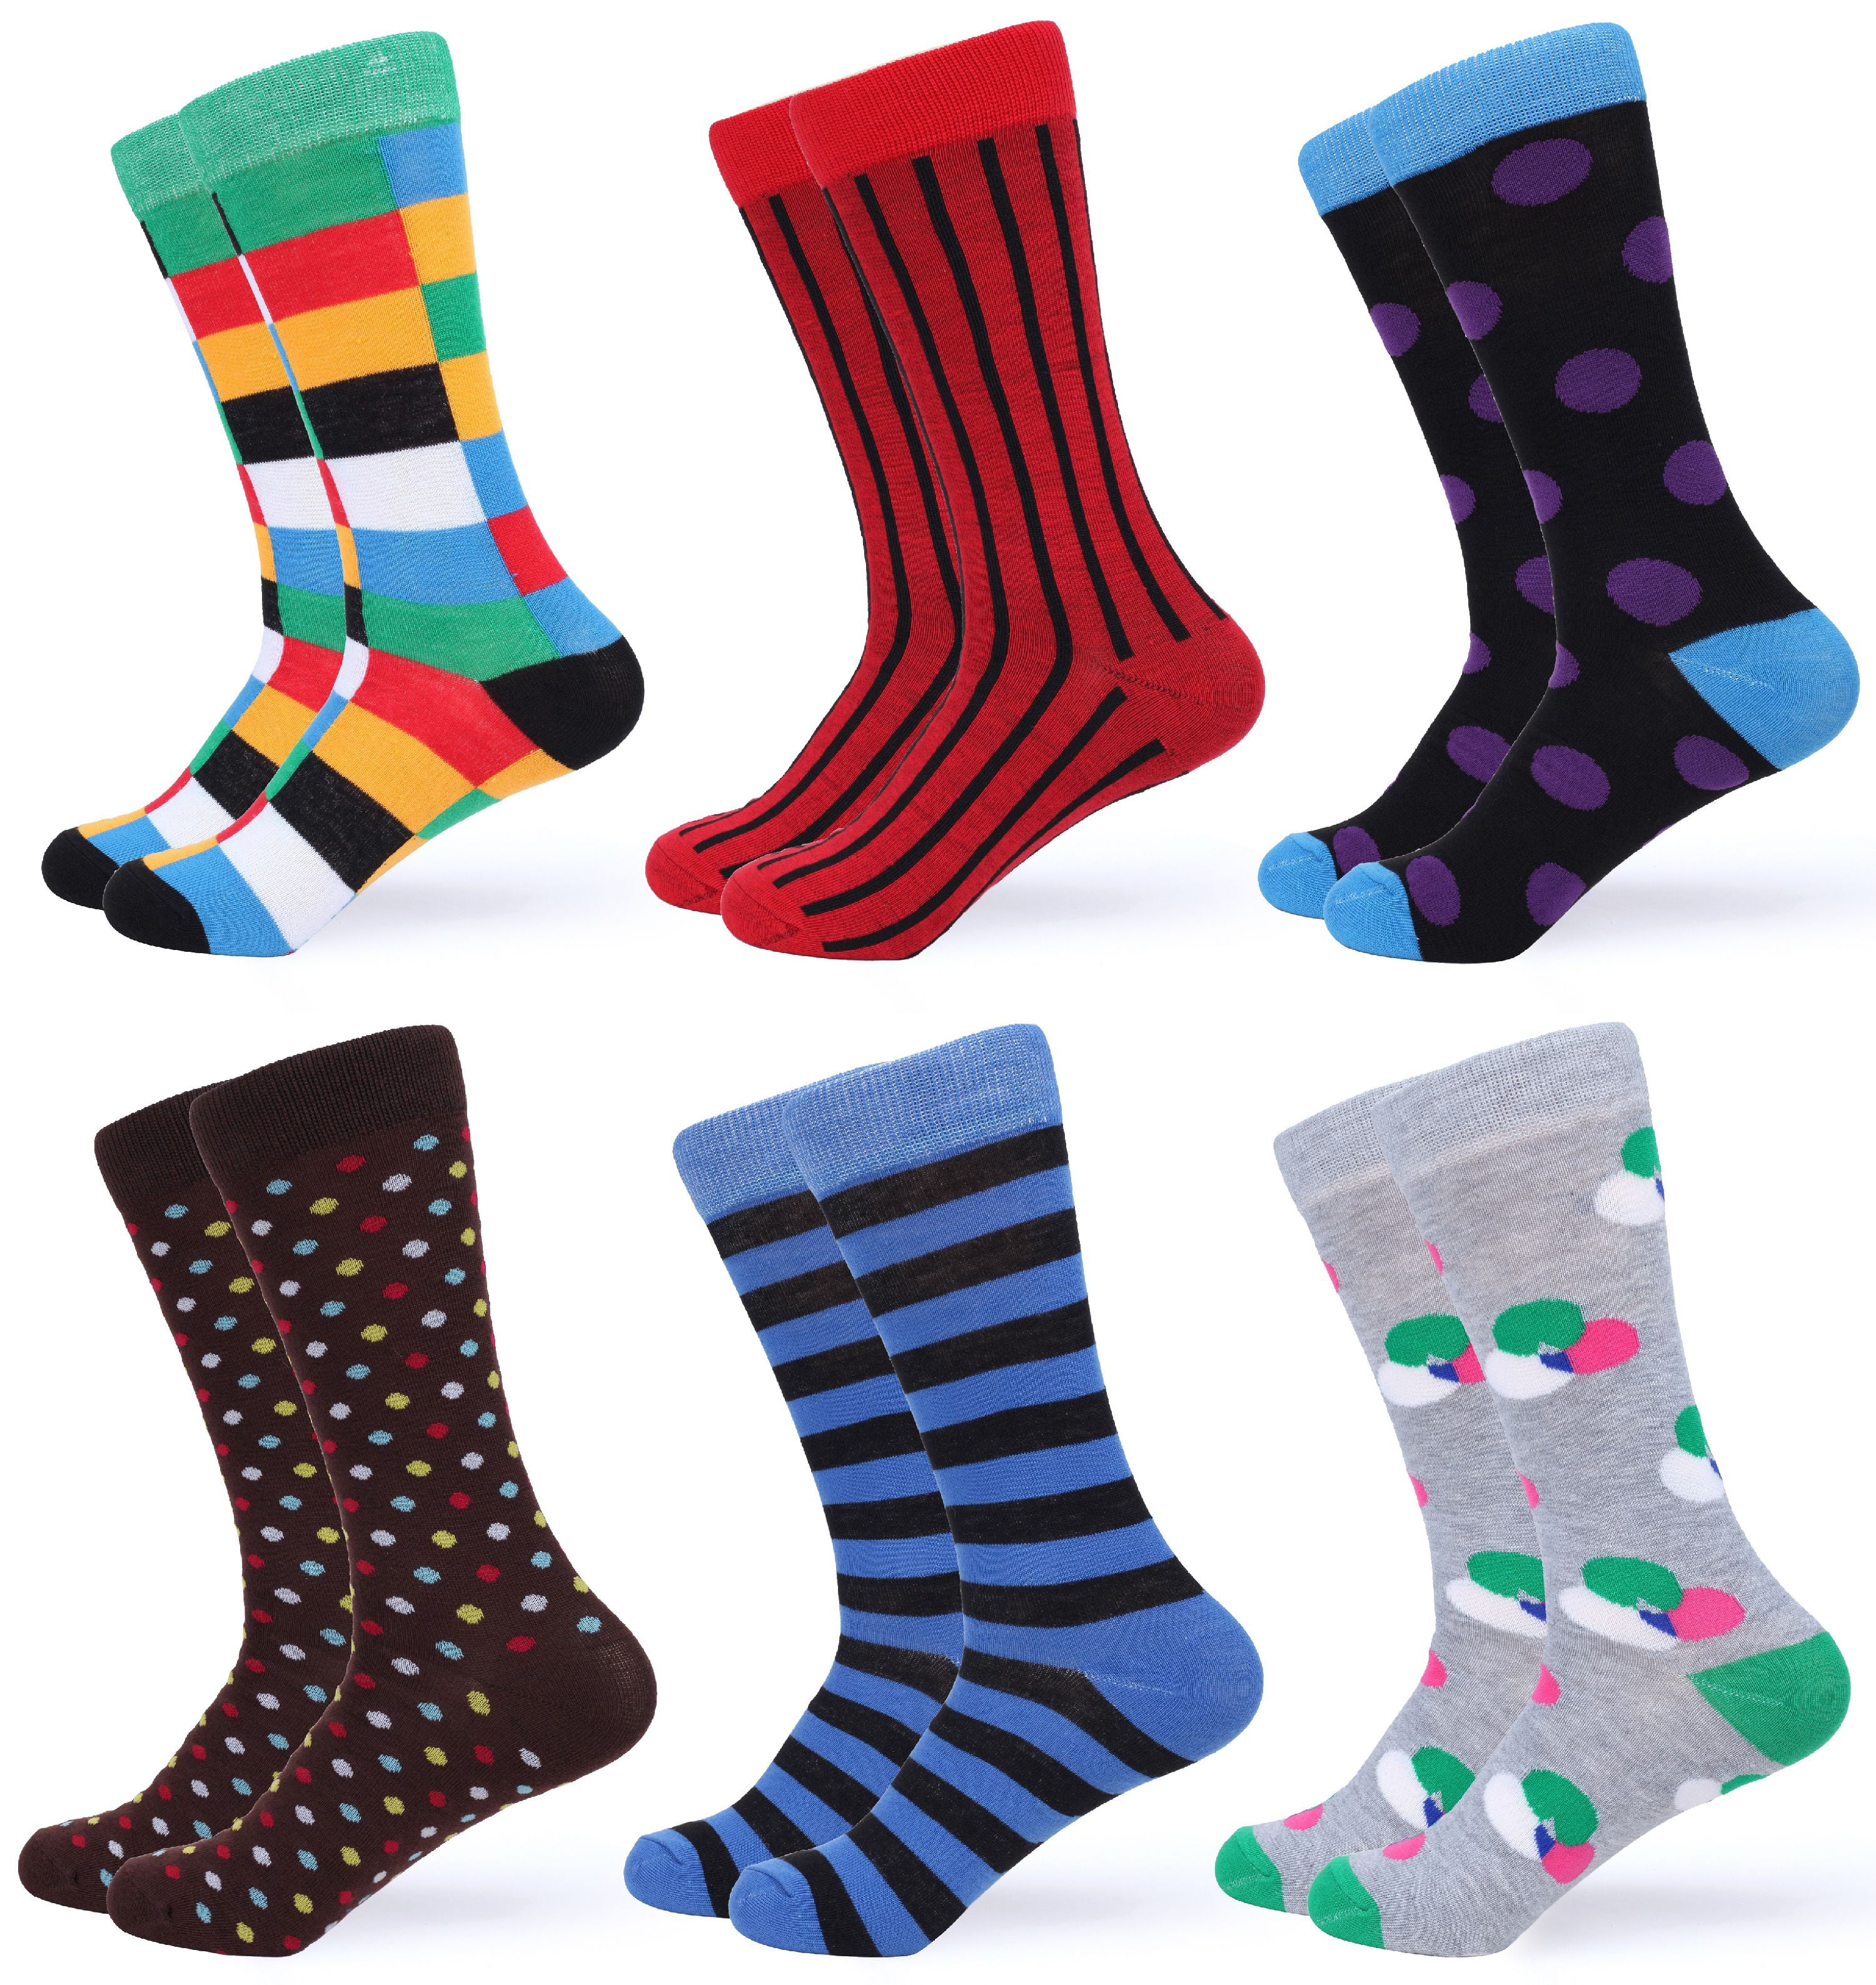 Gallery Seven - Gallery Seven Mens Dress Socks Funky Colorful Socks for ...